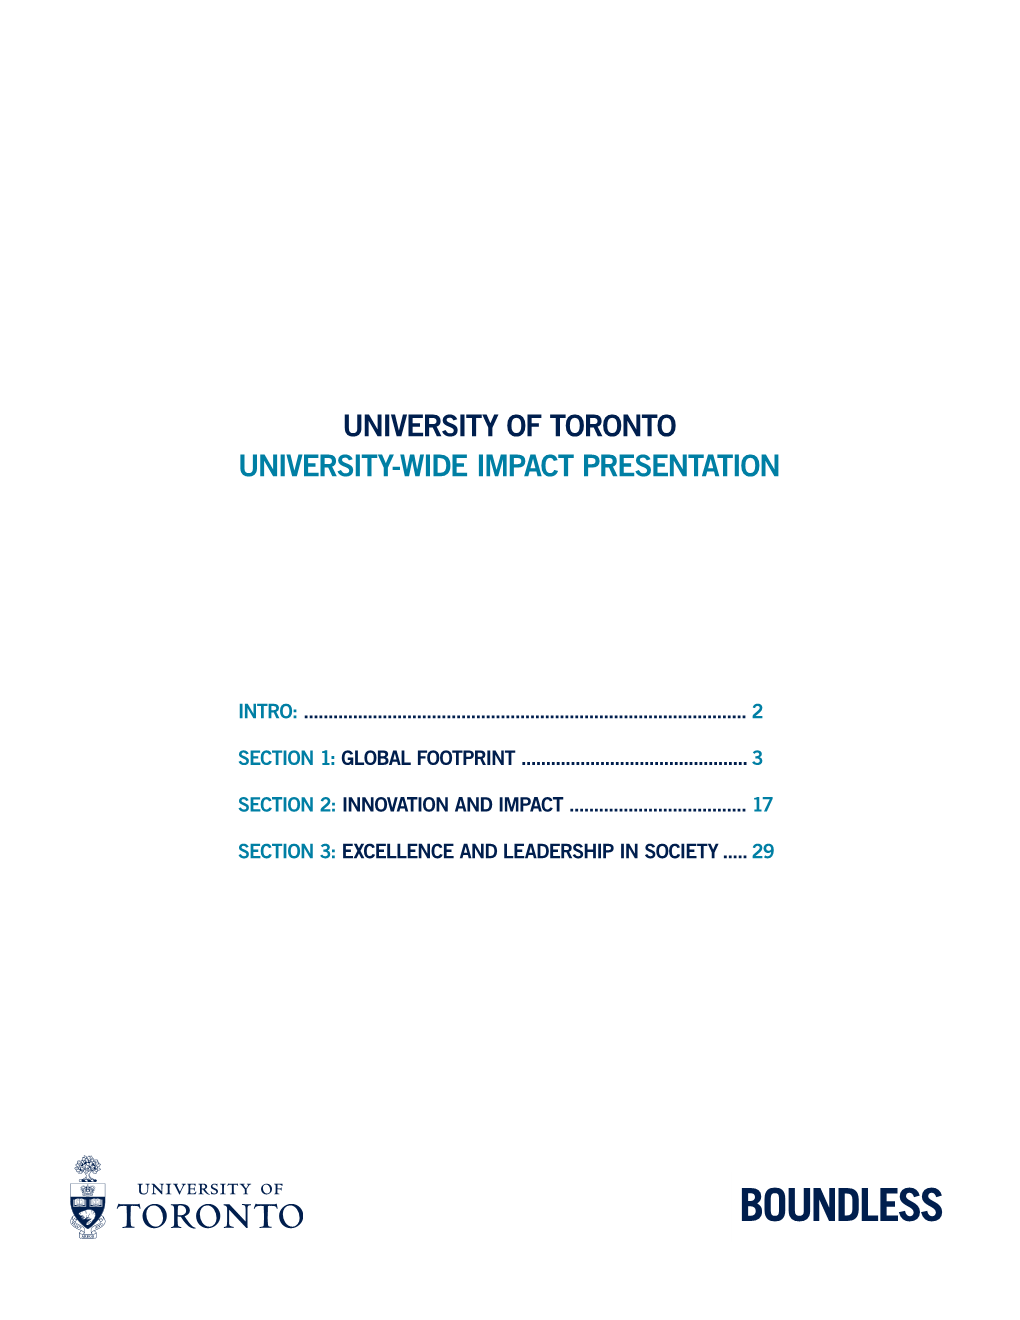 University-Wide Impact Presentation